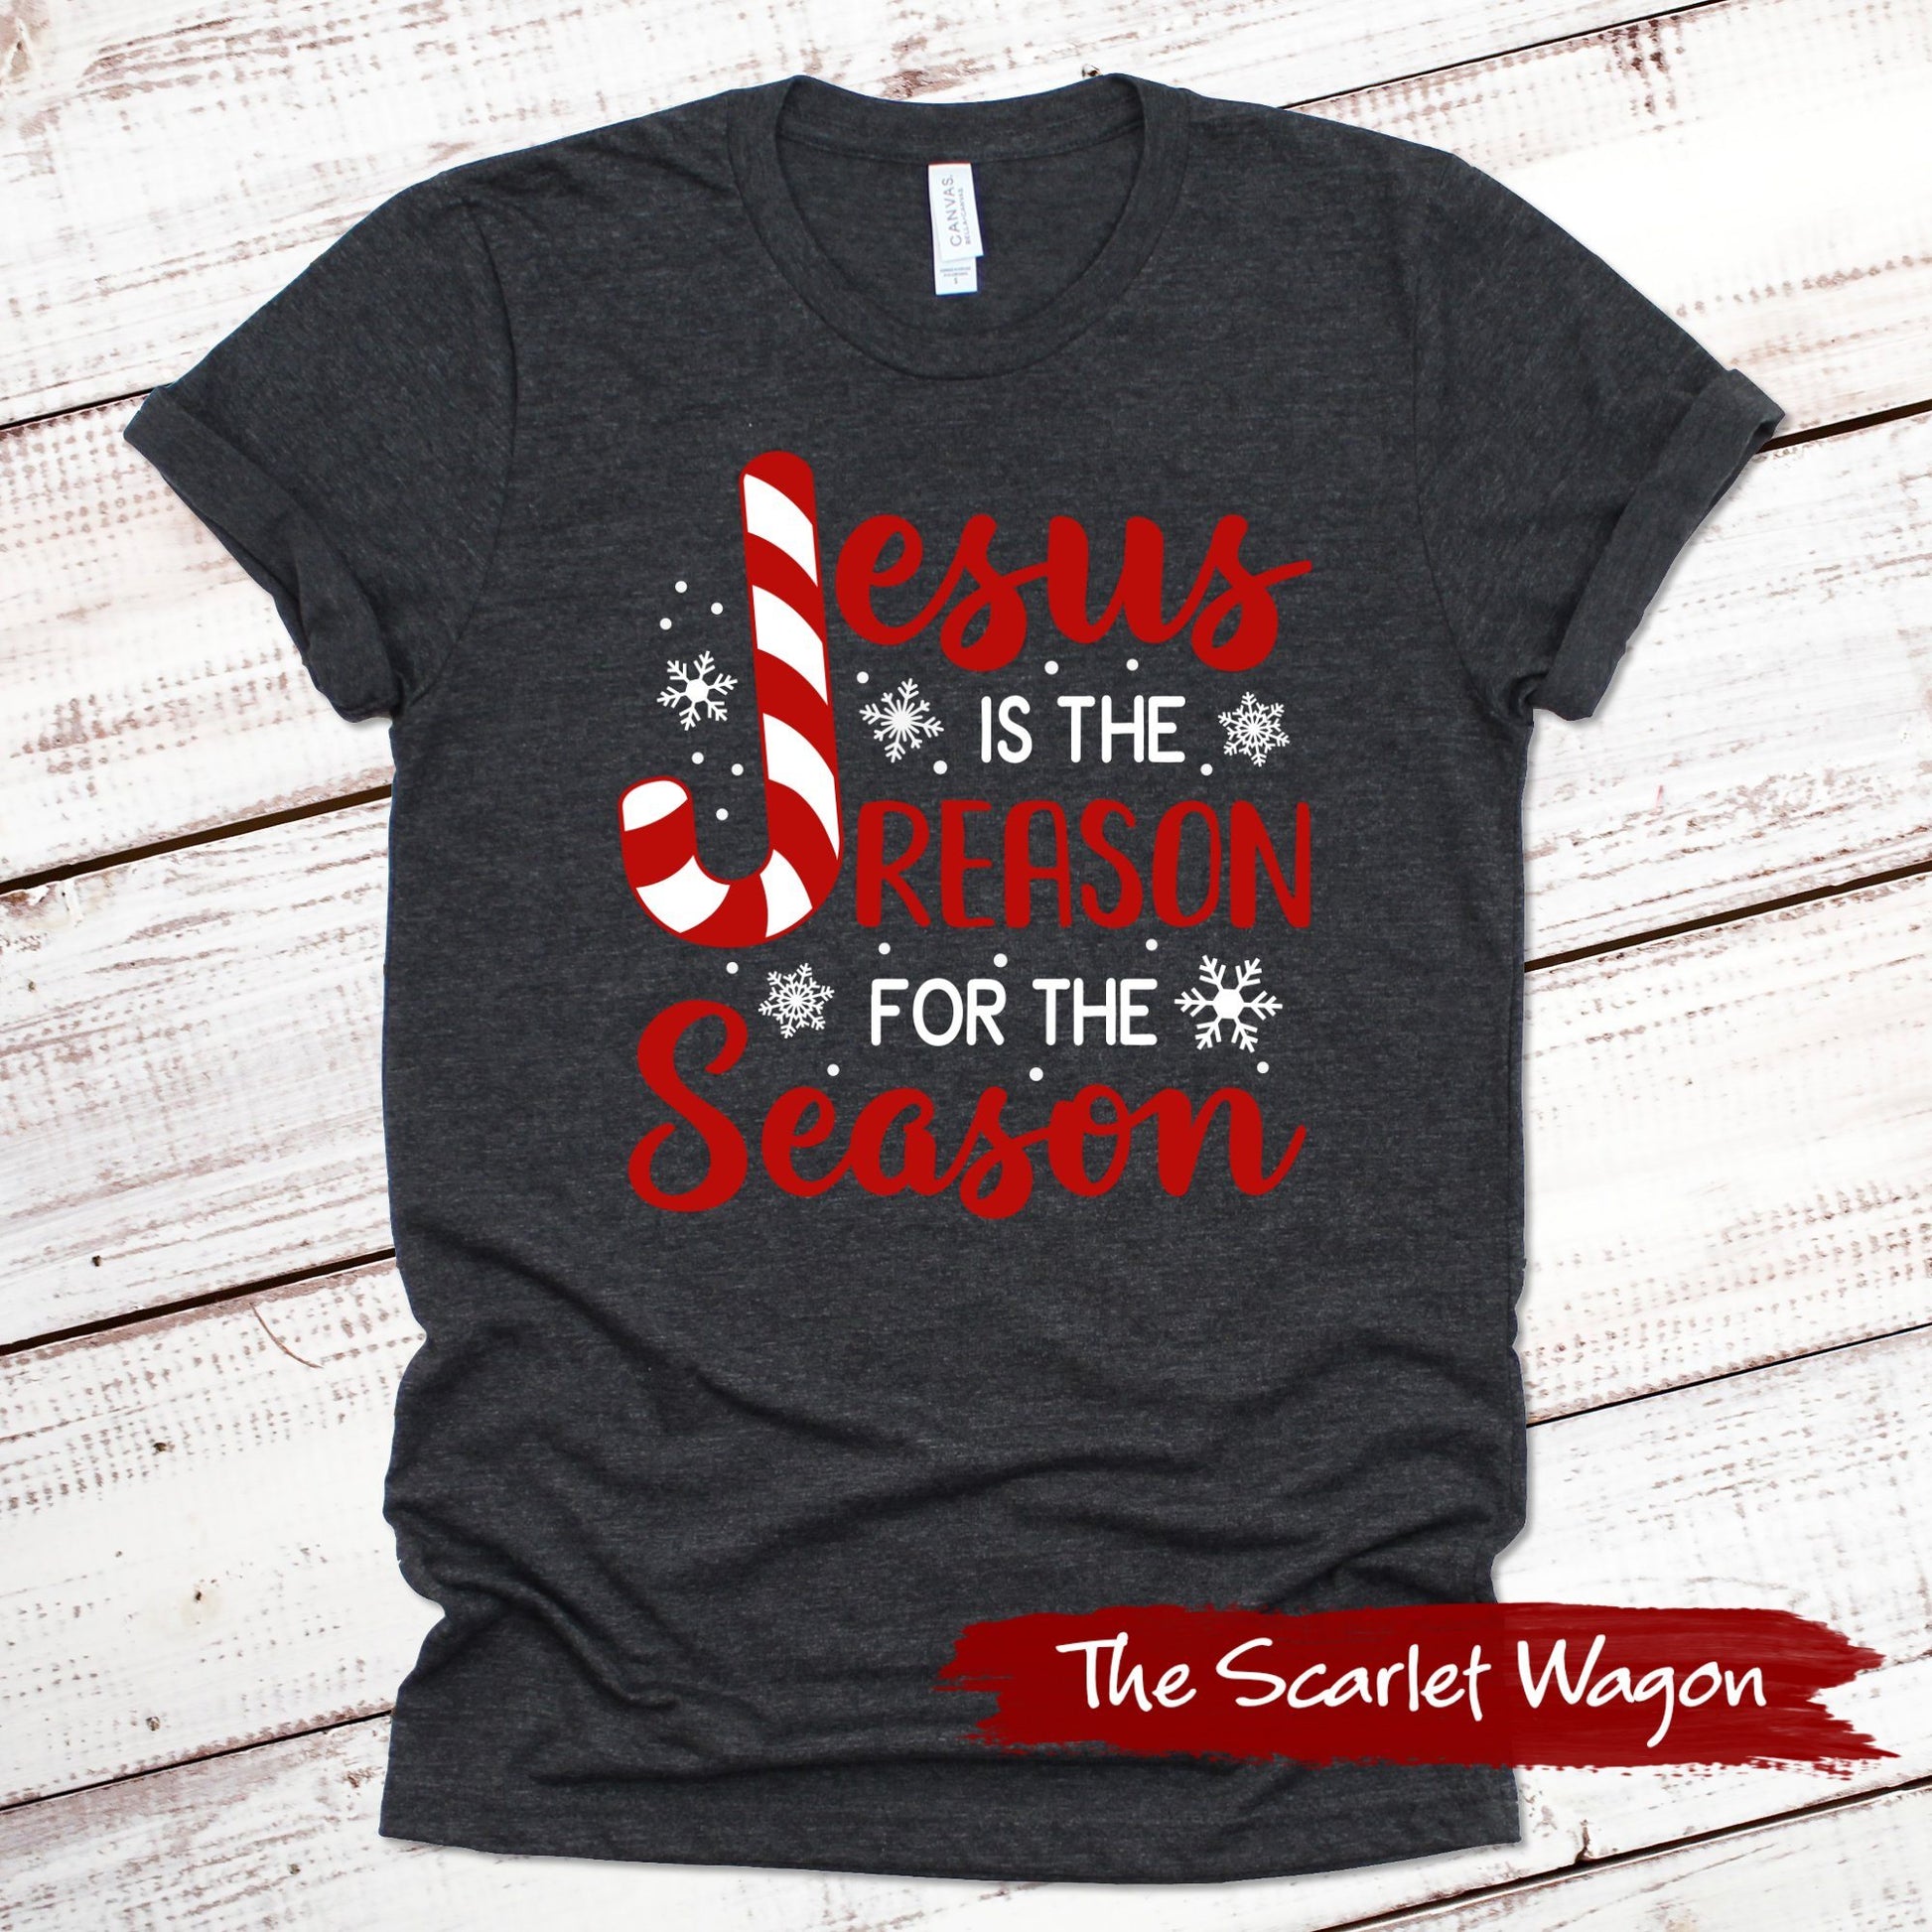 Jesus is the Reason for the Season Christmas Shirt Scarlet Wagon Dark Gray Heather XS 